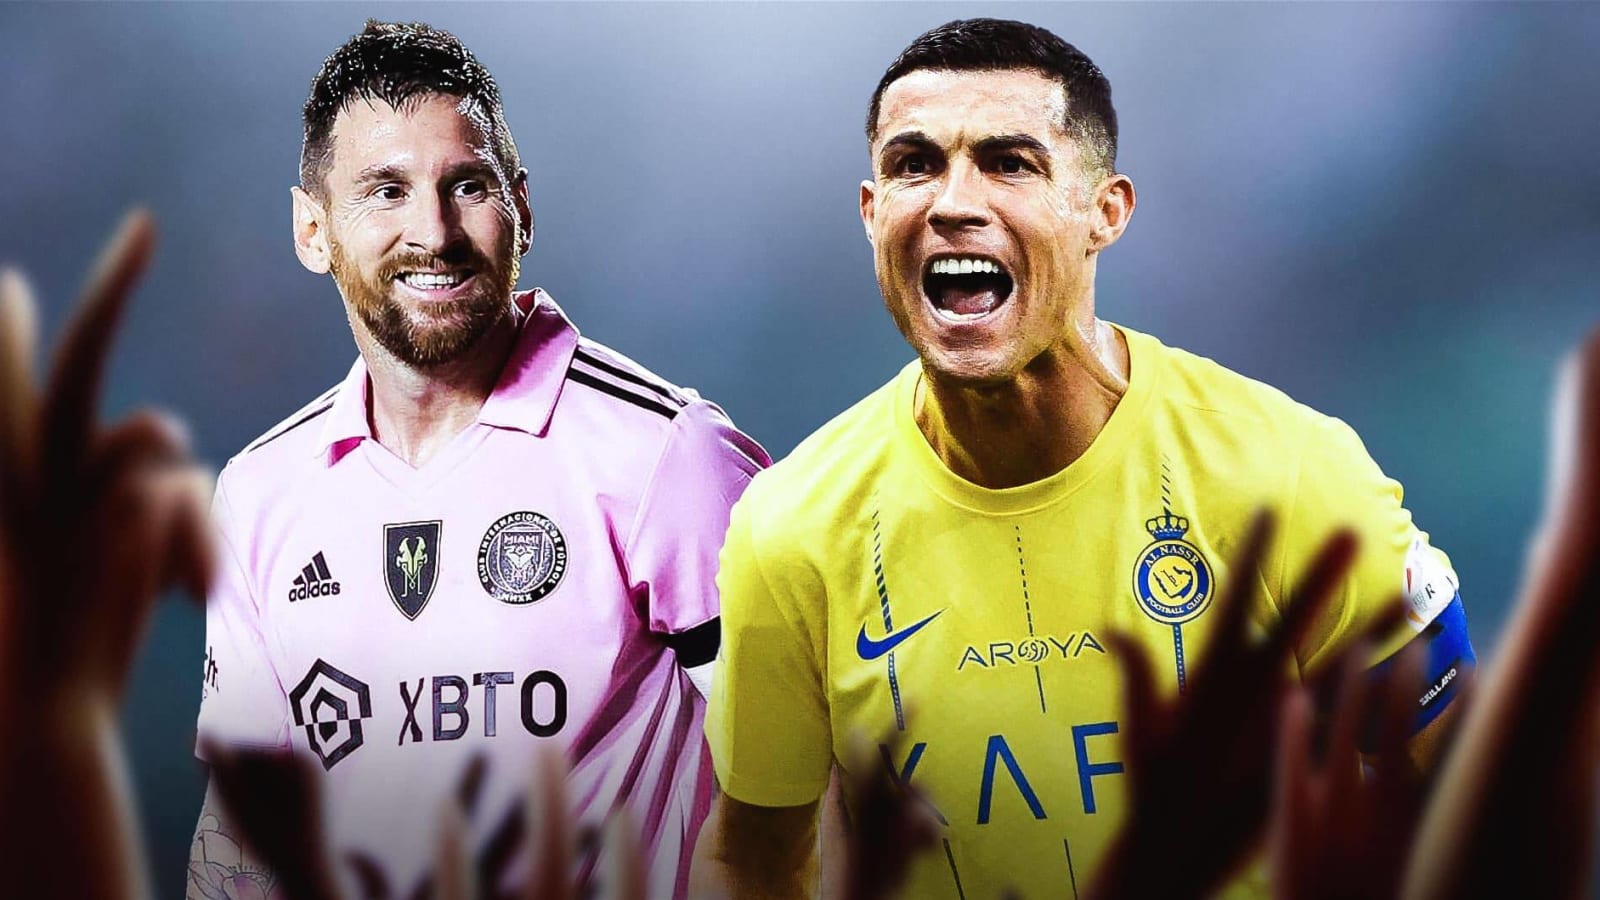 Should Cristiano Ronaldo and Lionel Messi return to Europe?